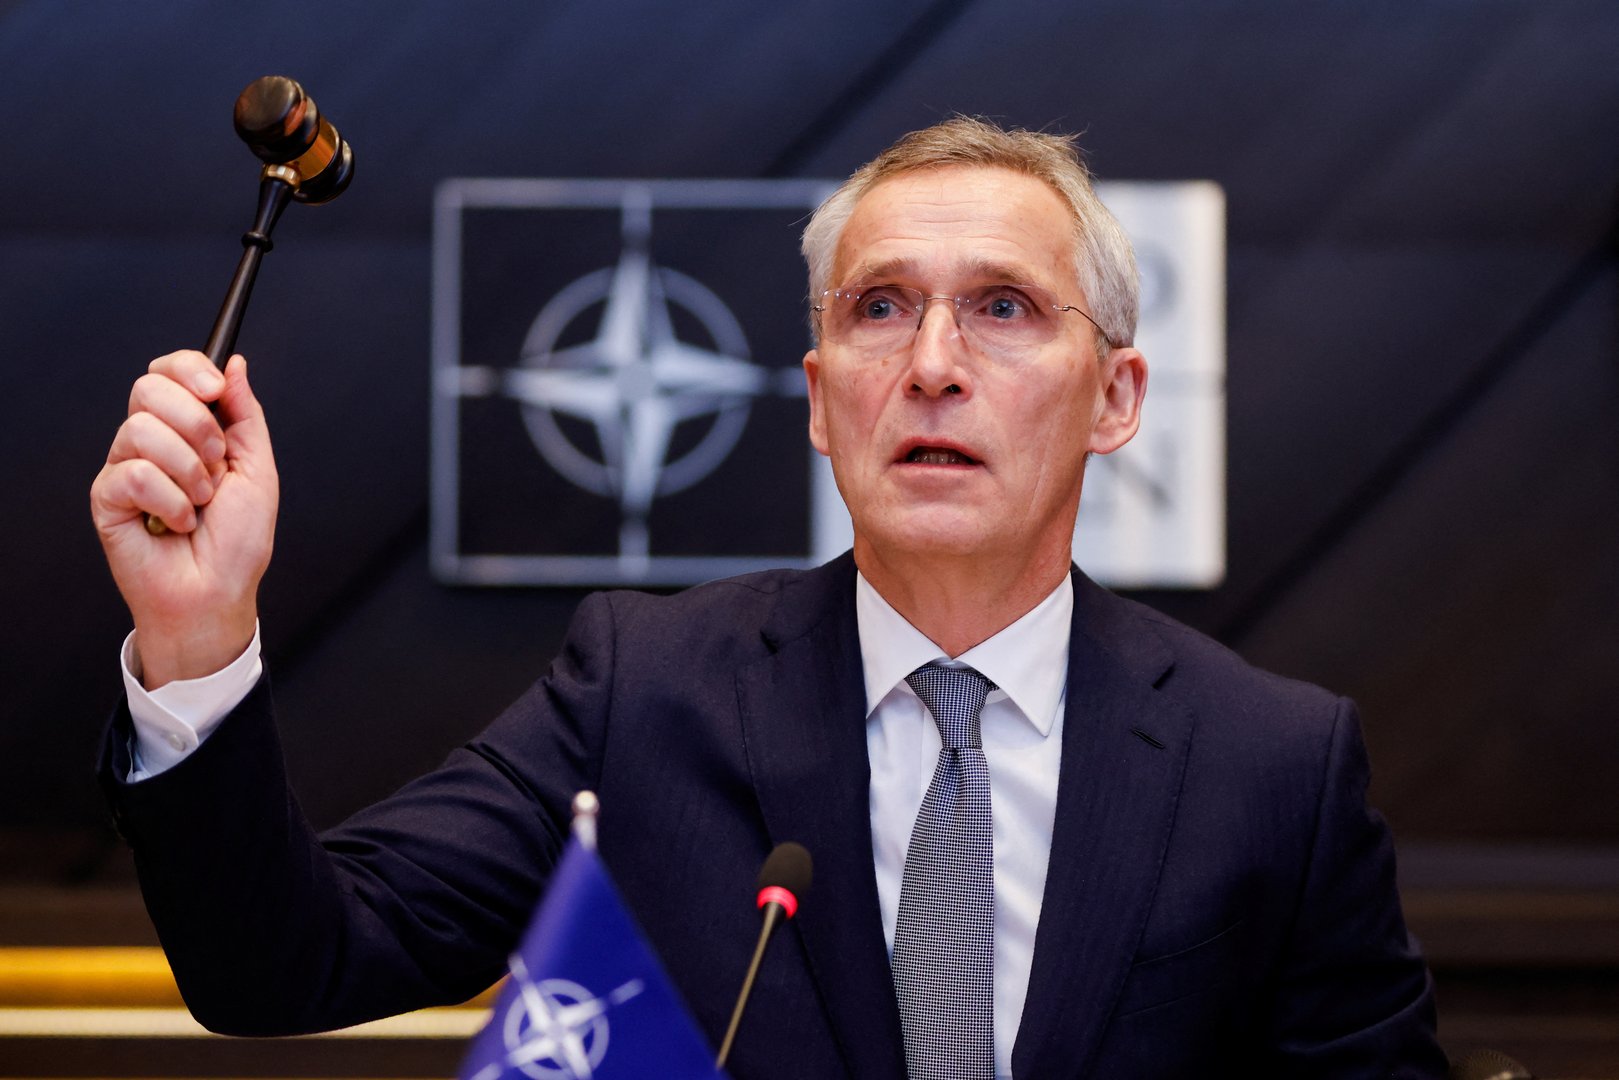 image Nato boss seeks €40bn per year for Ukraine military aid, source says